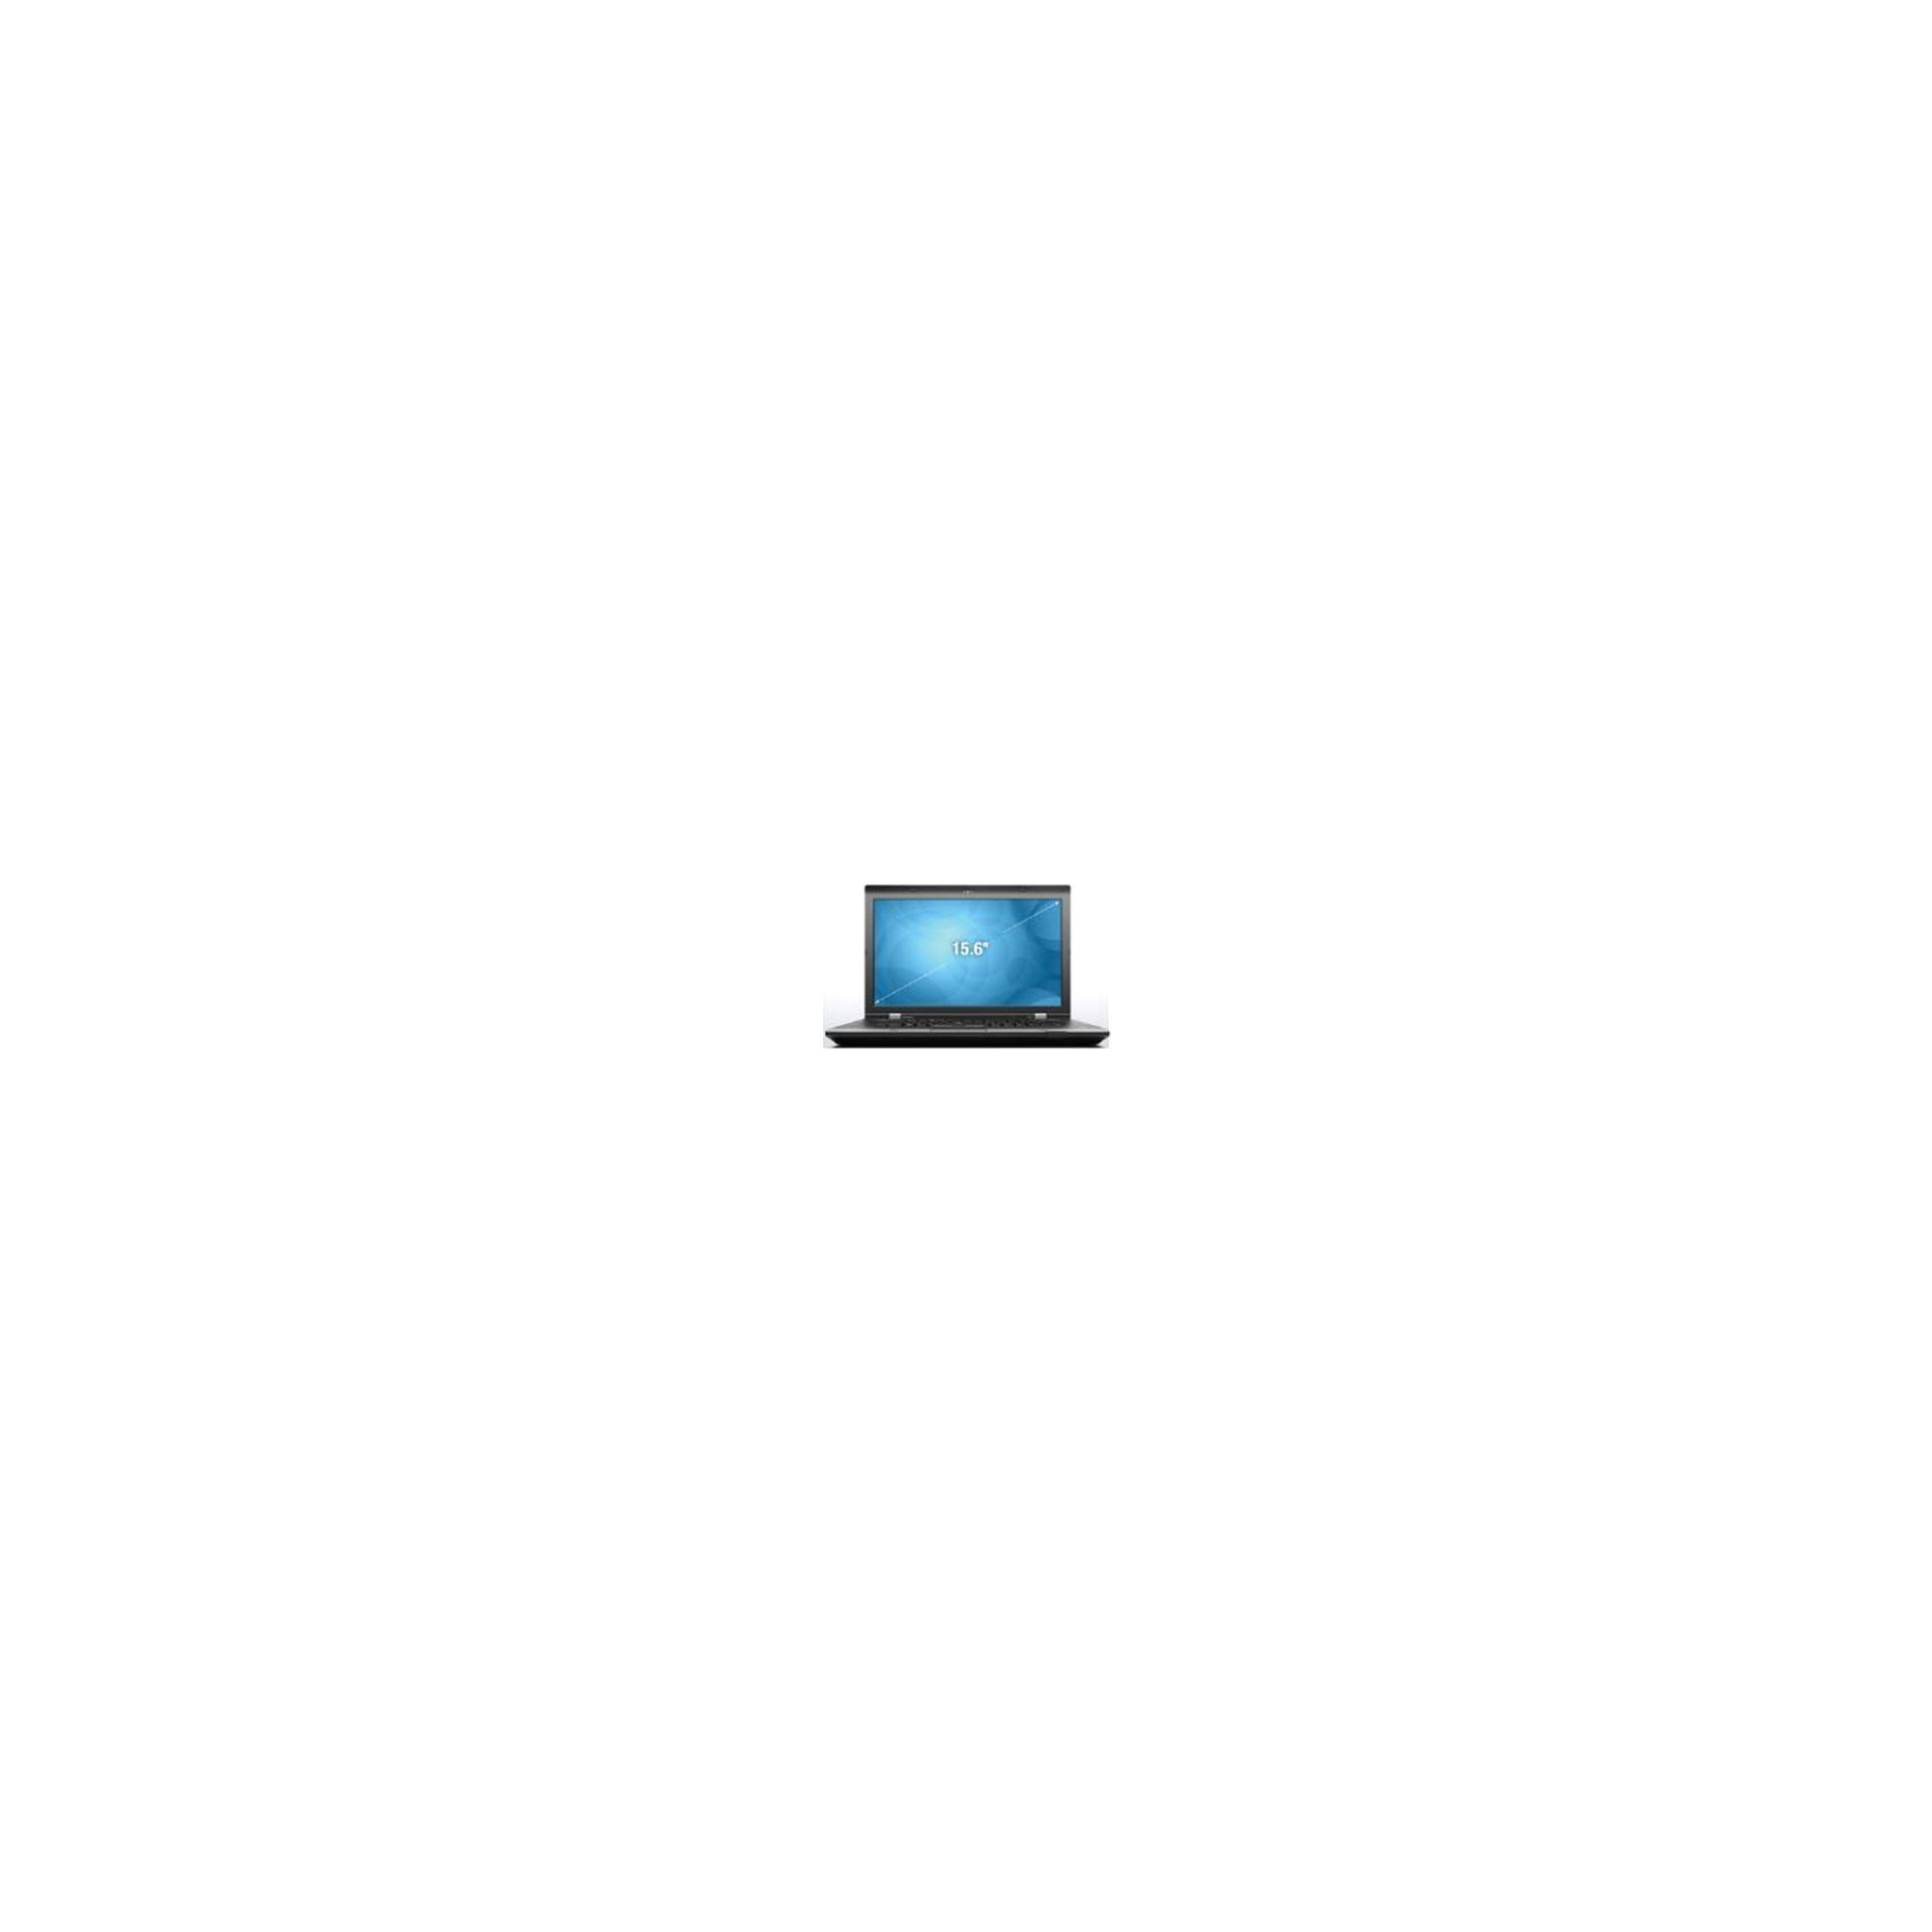 Lenovo ThinkPad L530 248135G (15.6 inch) Notebook Core i3 (3110M) 2.4GHz 4GB 500GB DVD±RW WLAN BT Webcam Windows 8 Pro (Intel HD Graphics) Black at Tesco Direct